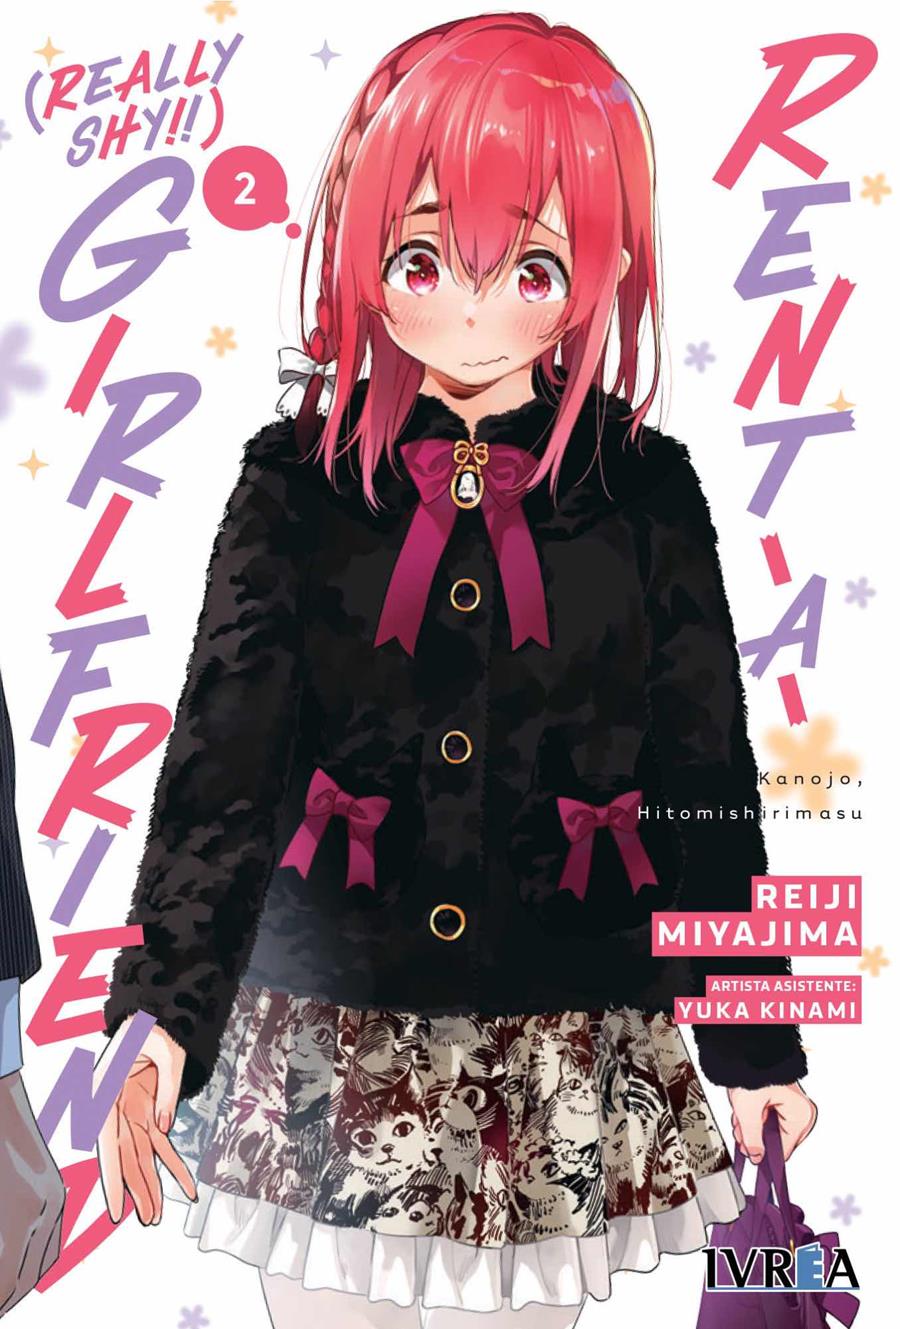 Rent-a- (realyy shy!!!) - Girlfriend 02 | N1222-IVR07 | Reiji Miyajima, Yuka Kinami | Terra de Còmic - Tu tienda de cómics online especializada en cómics, manga y merchandising